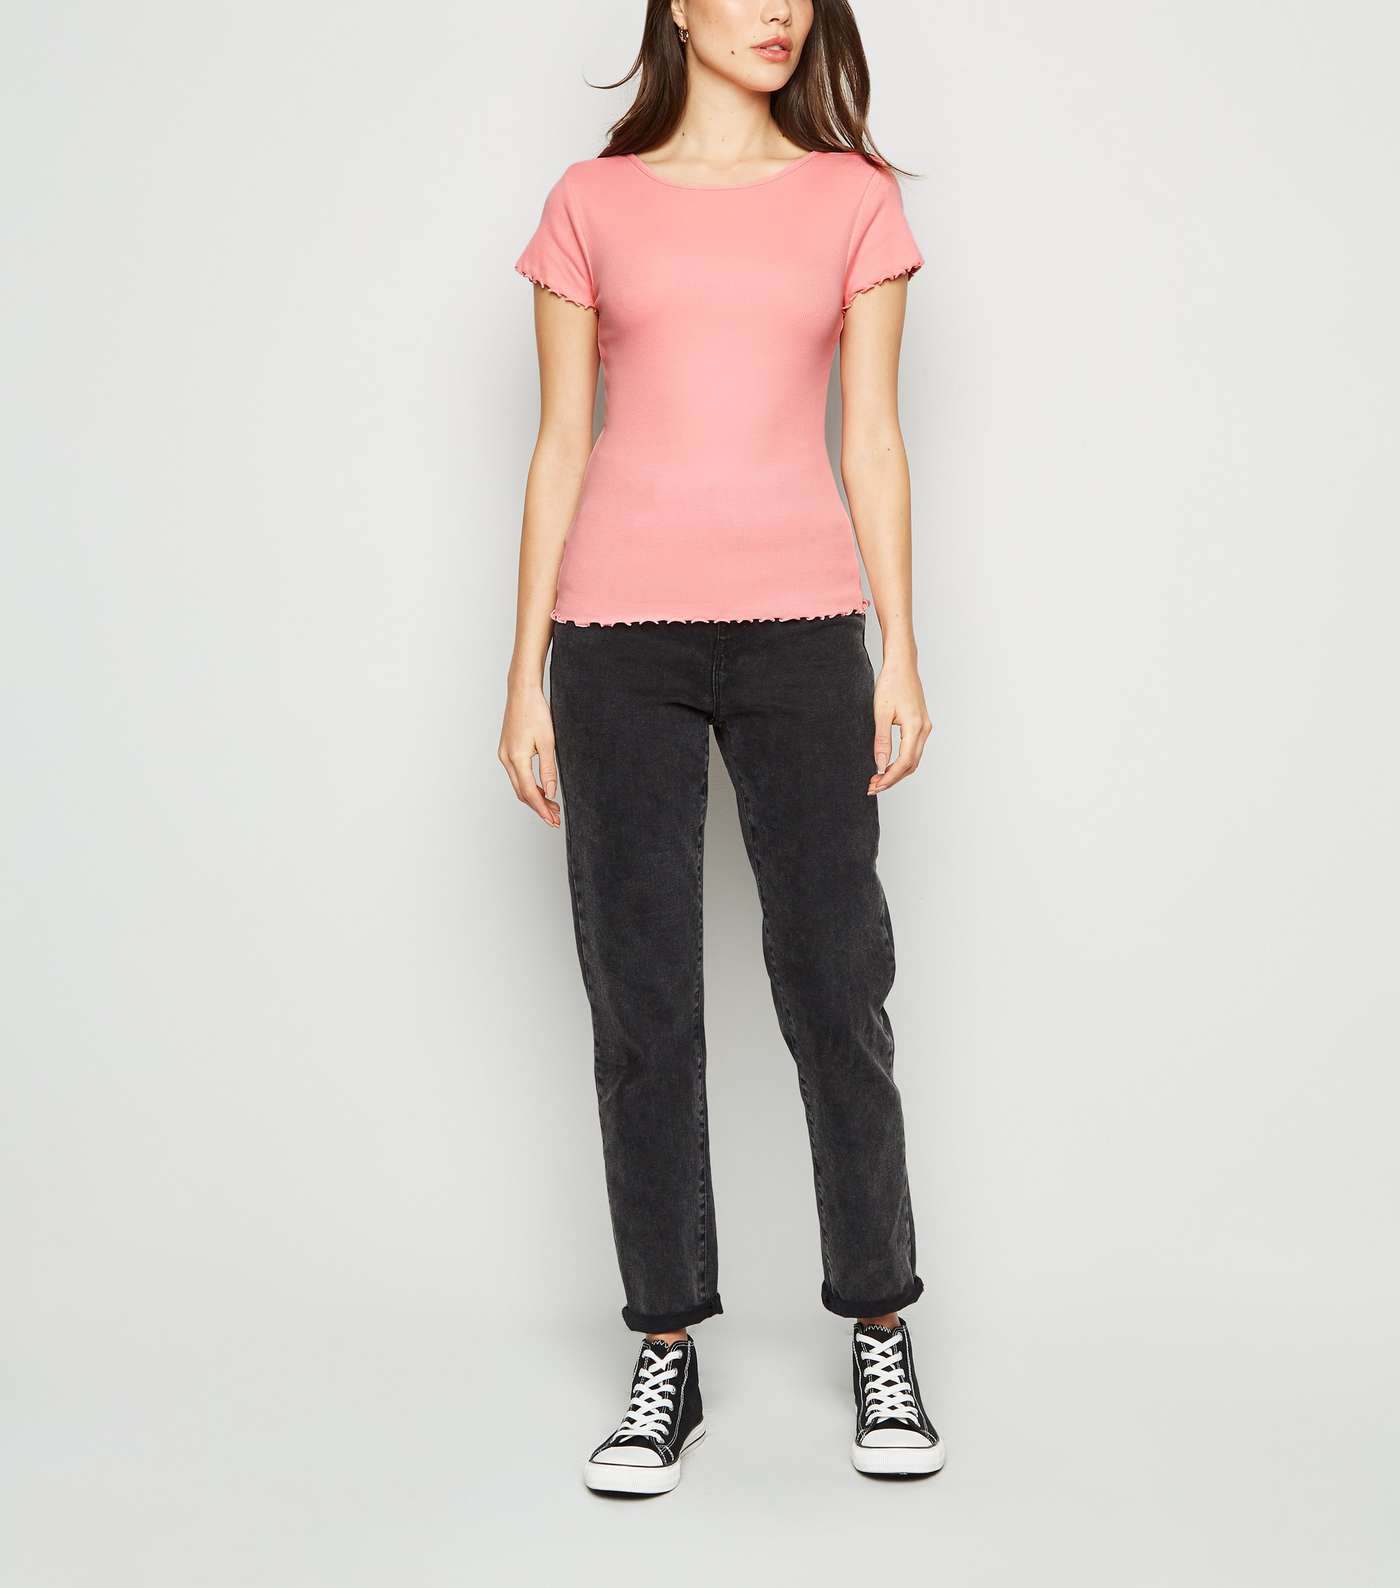 Bright Pink Frill Trim Cap Sleeve T-Shirt Image 2